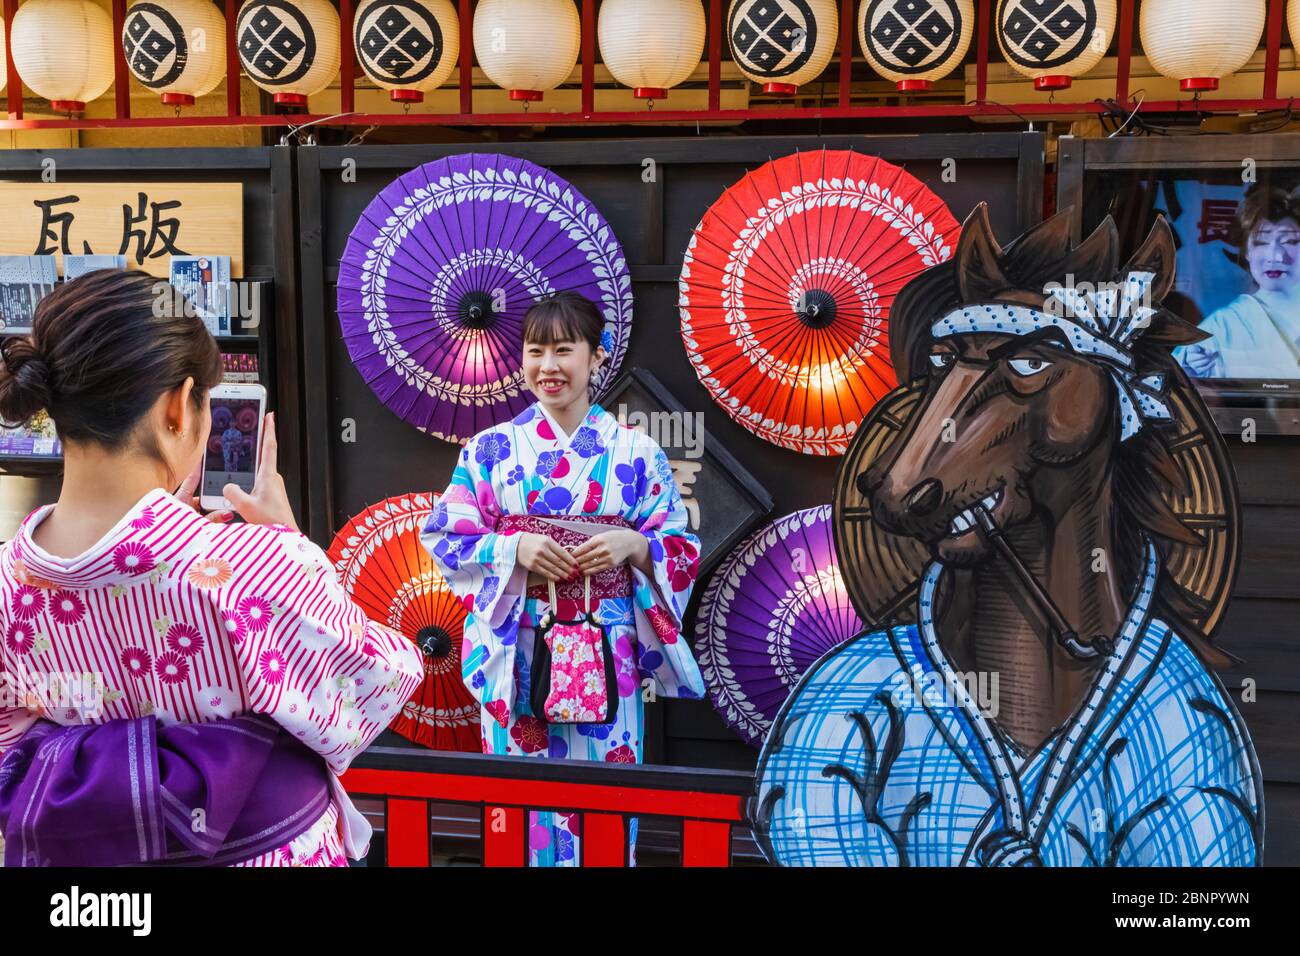 Japan, Honshu, Tokyo, Asakusa, Women in Kimono Taking Souvenir Photos in front of Colourful Paper Umbrellas Stock Photo